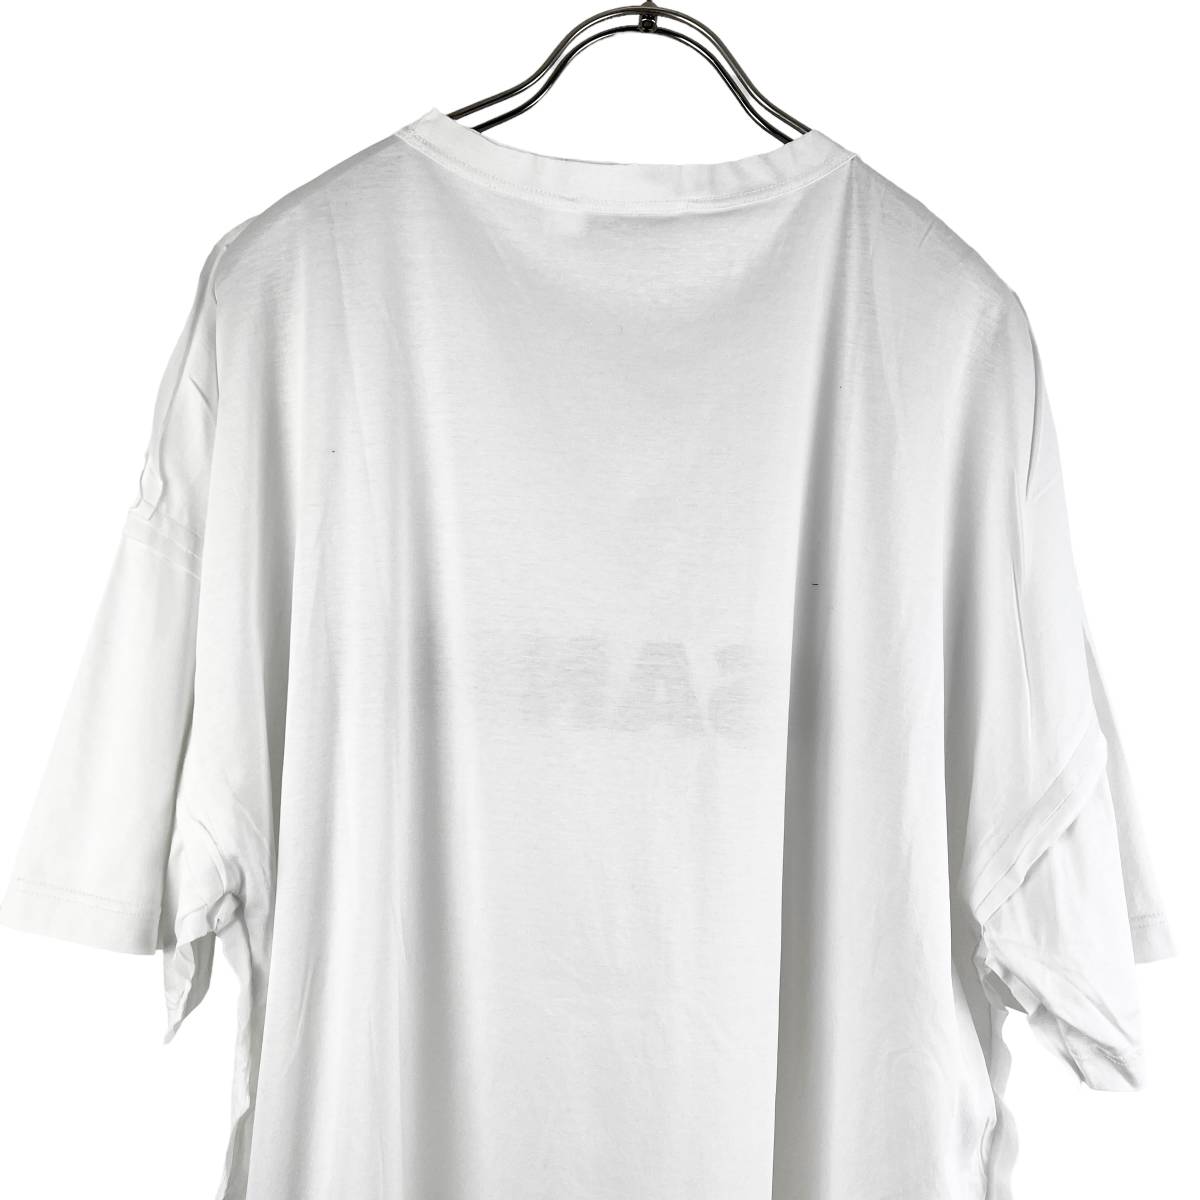 JIL SANDER(ジルサンダー) Oversized Drop Shoulder Material Switch T Shirt (white)